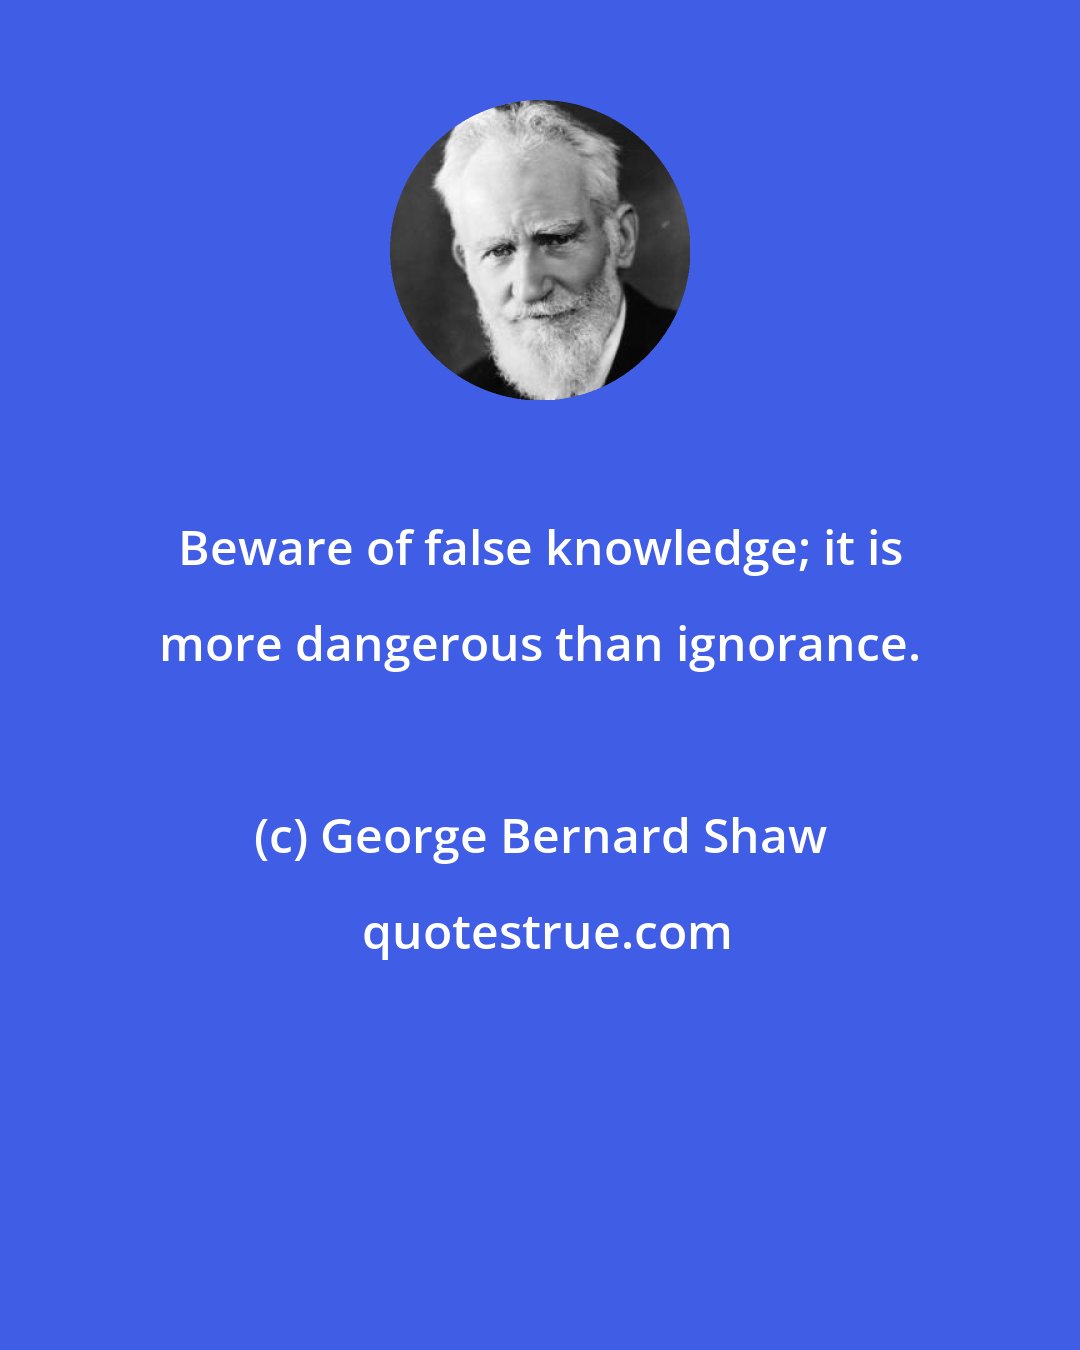 George Bernard Shaw: Beware of false knowledge; it is more dangerous than ignorance.